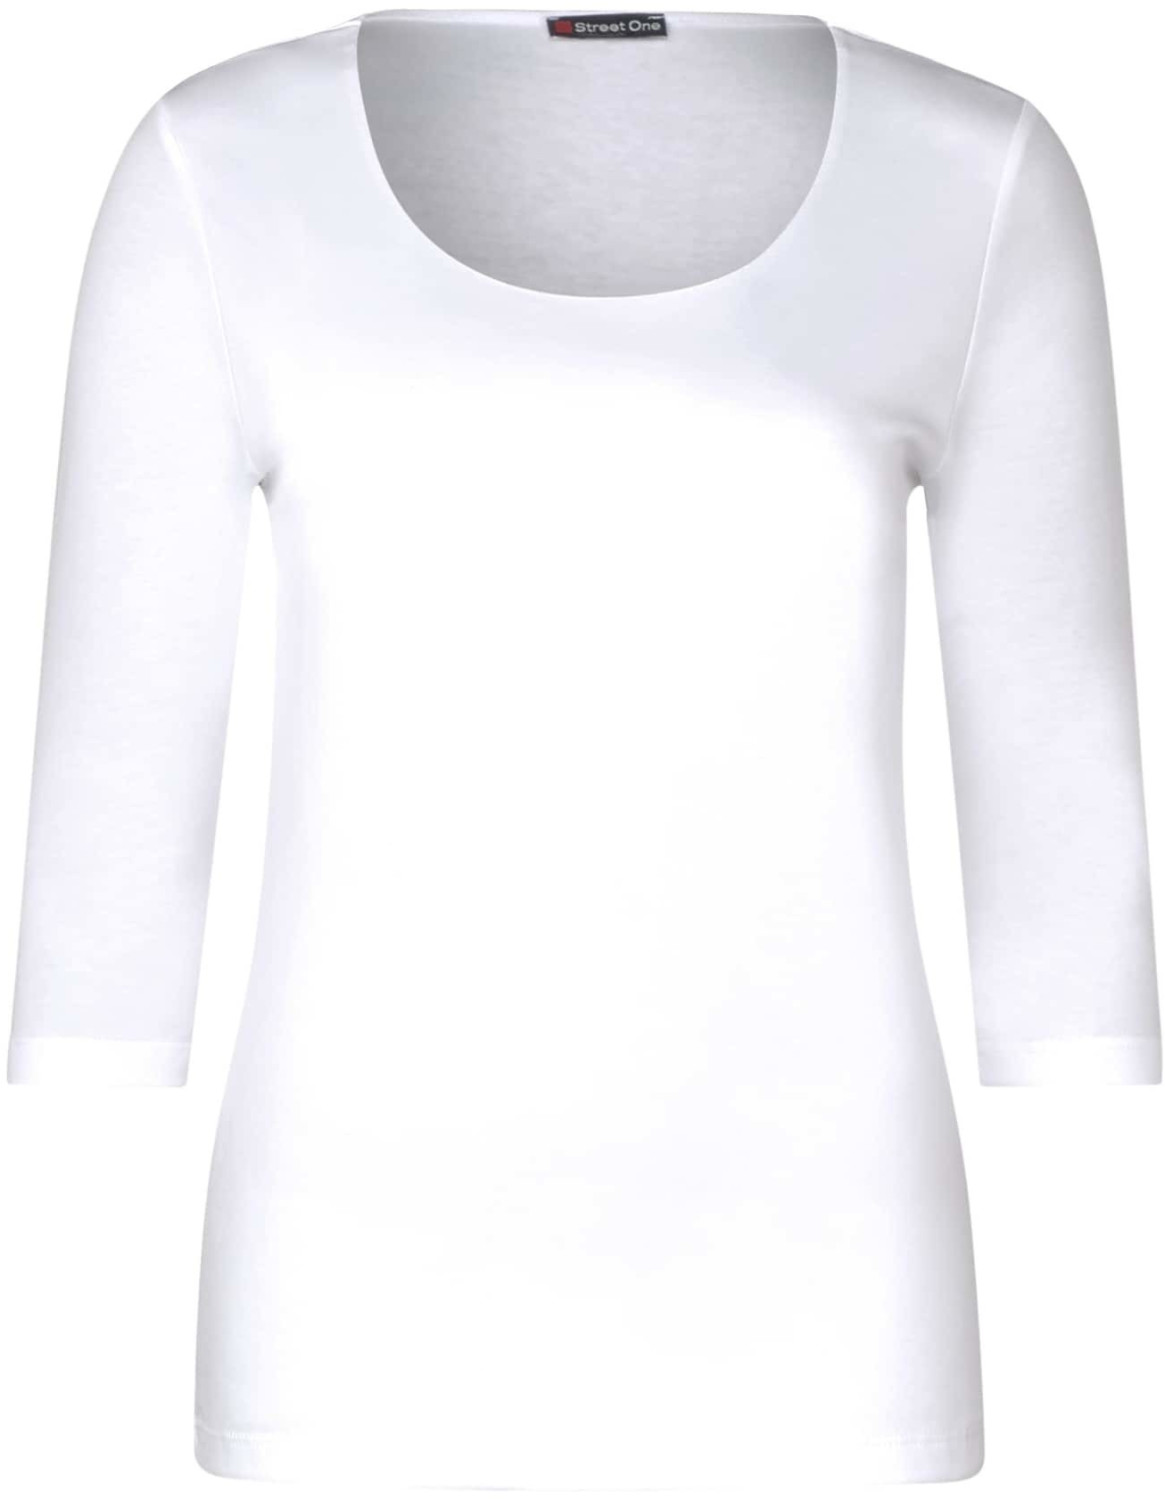 Street One Basic (A313977) Preisvergleich white | € Pania Shirt 17,96 ab bei